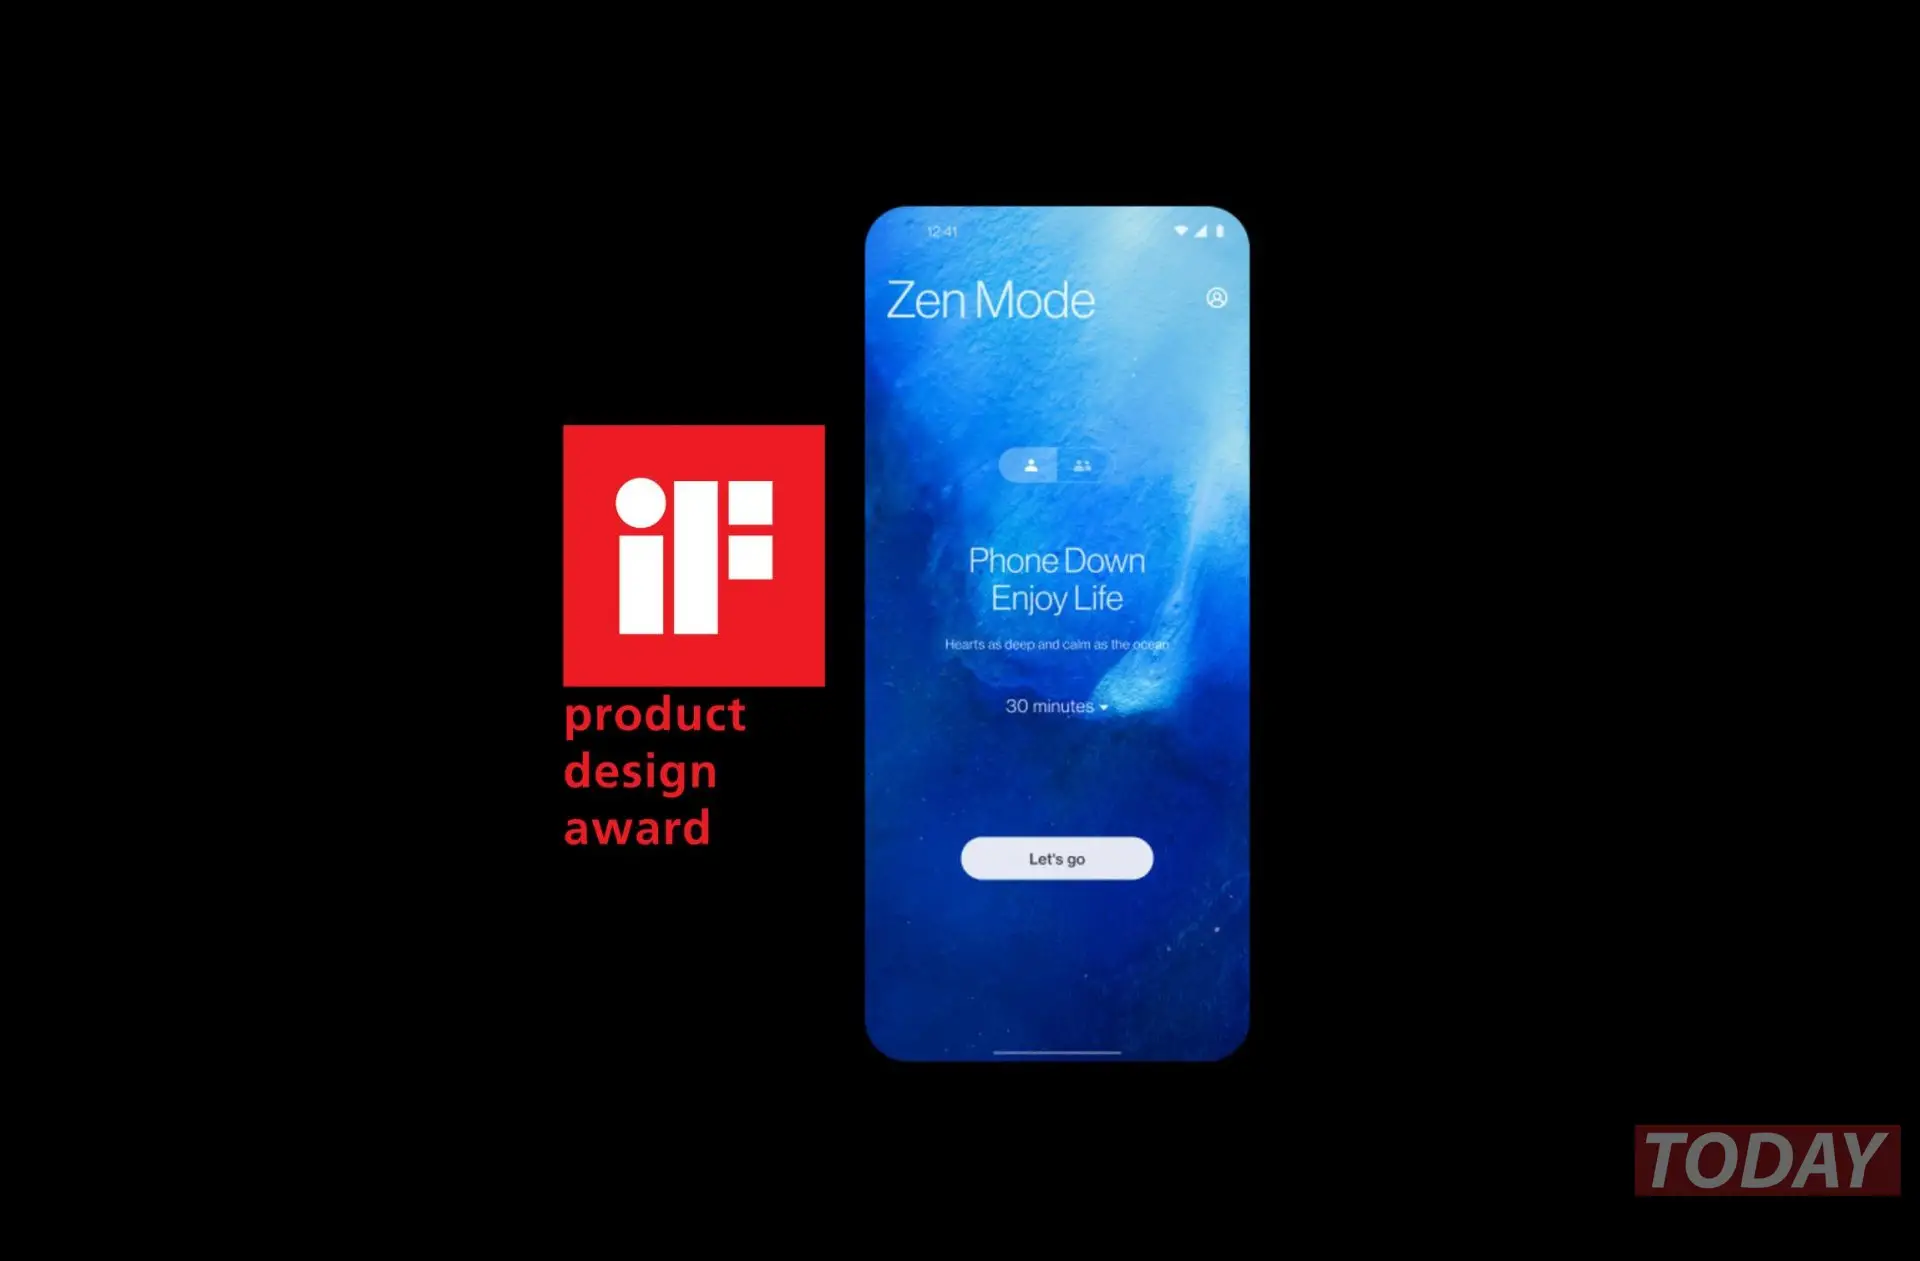 oneplus zen mode gewinnt if design award